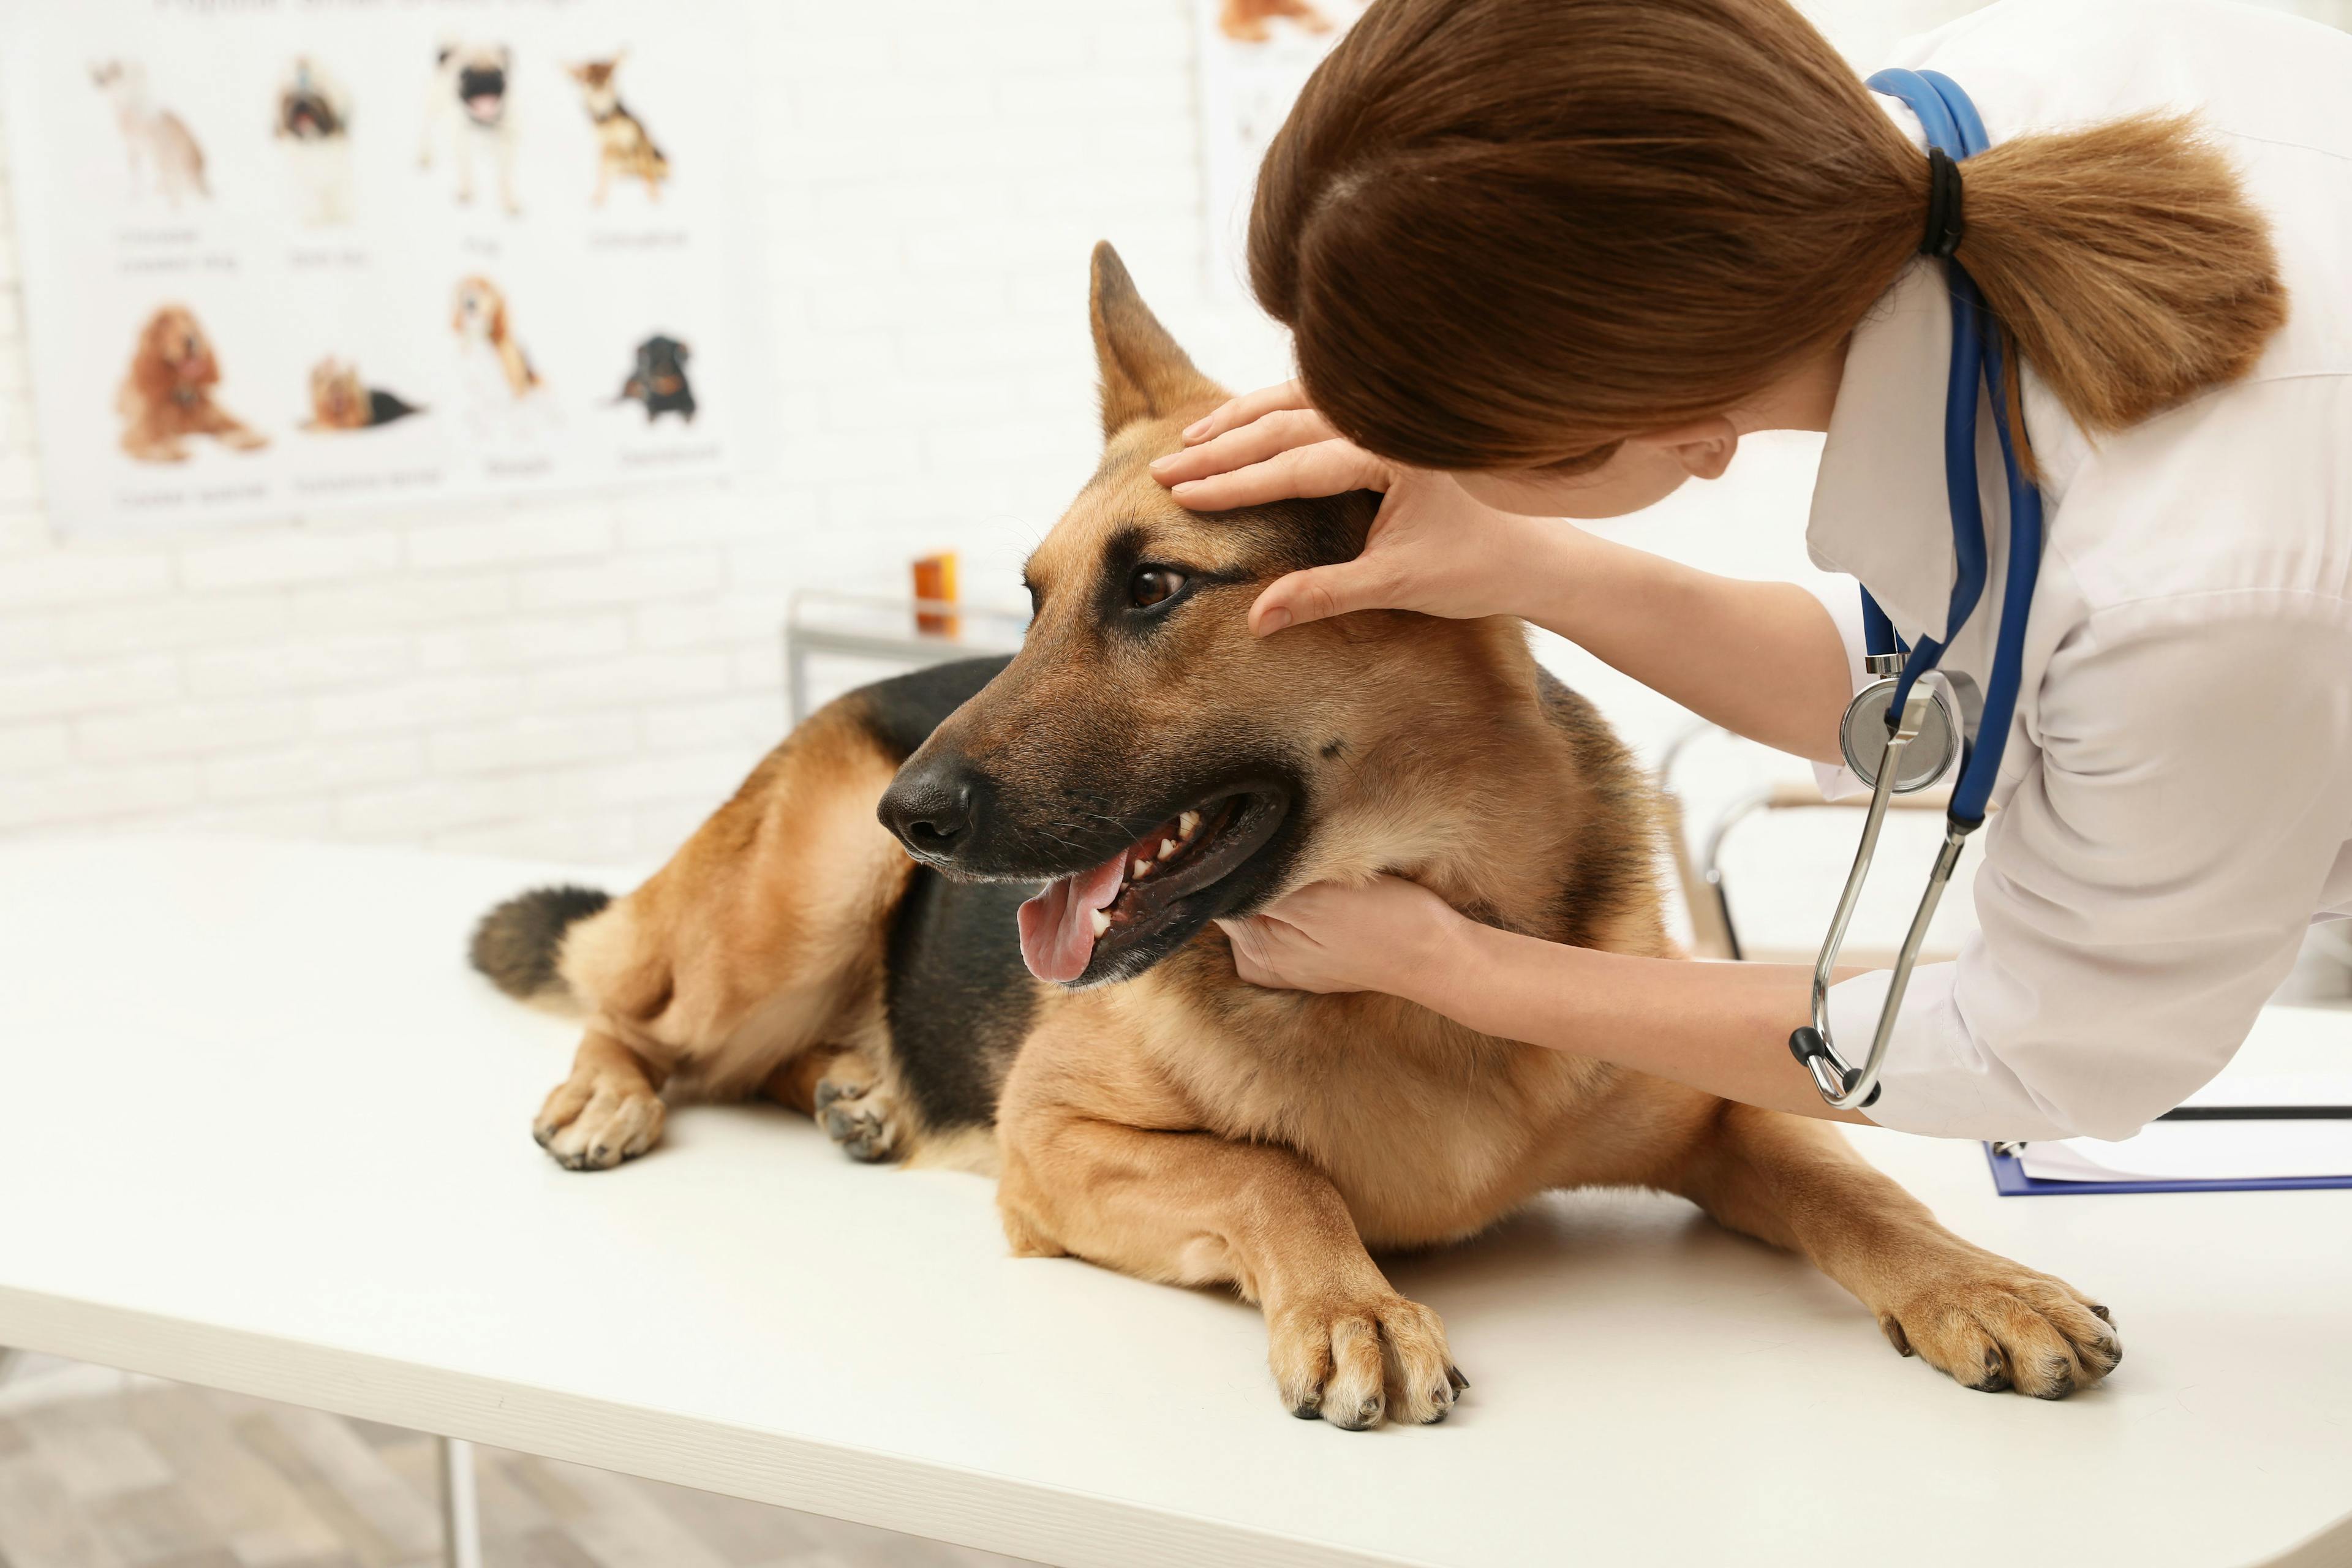 Dog receives an eye exam